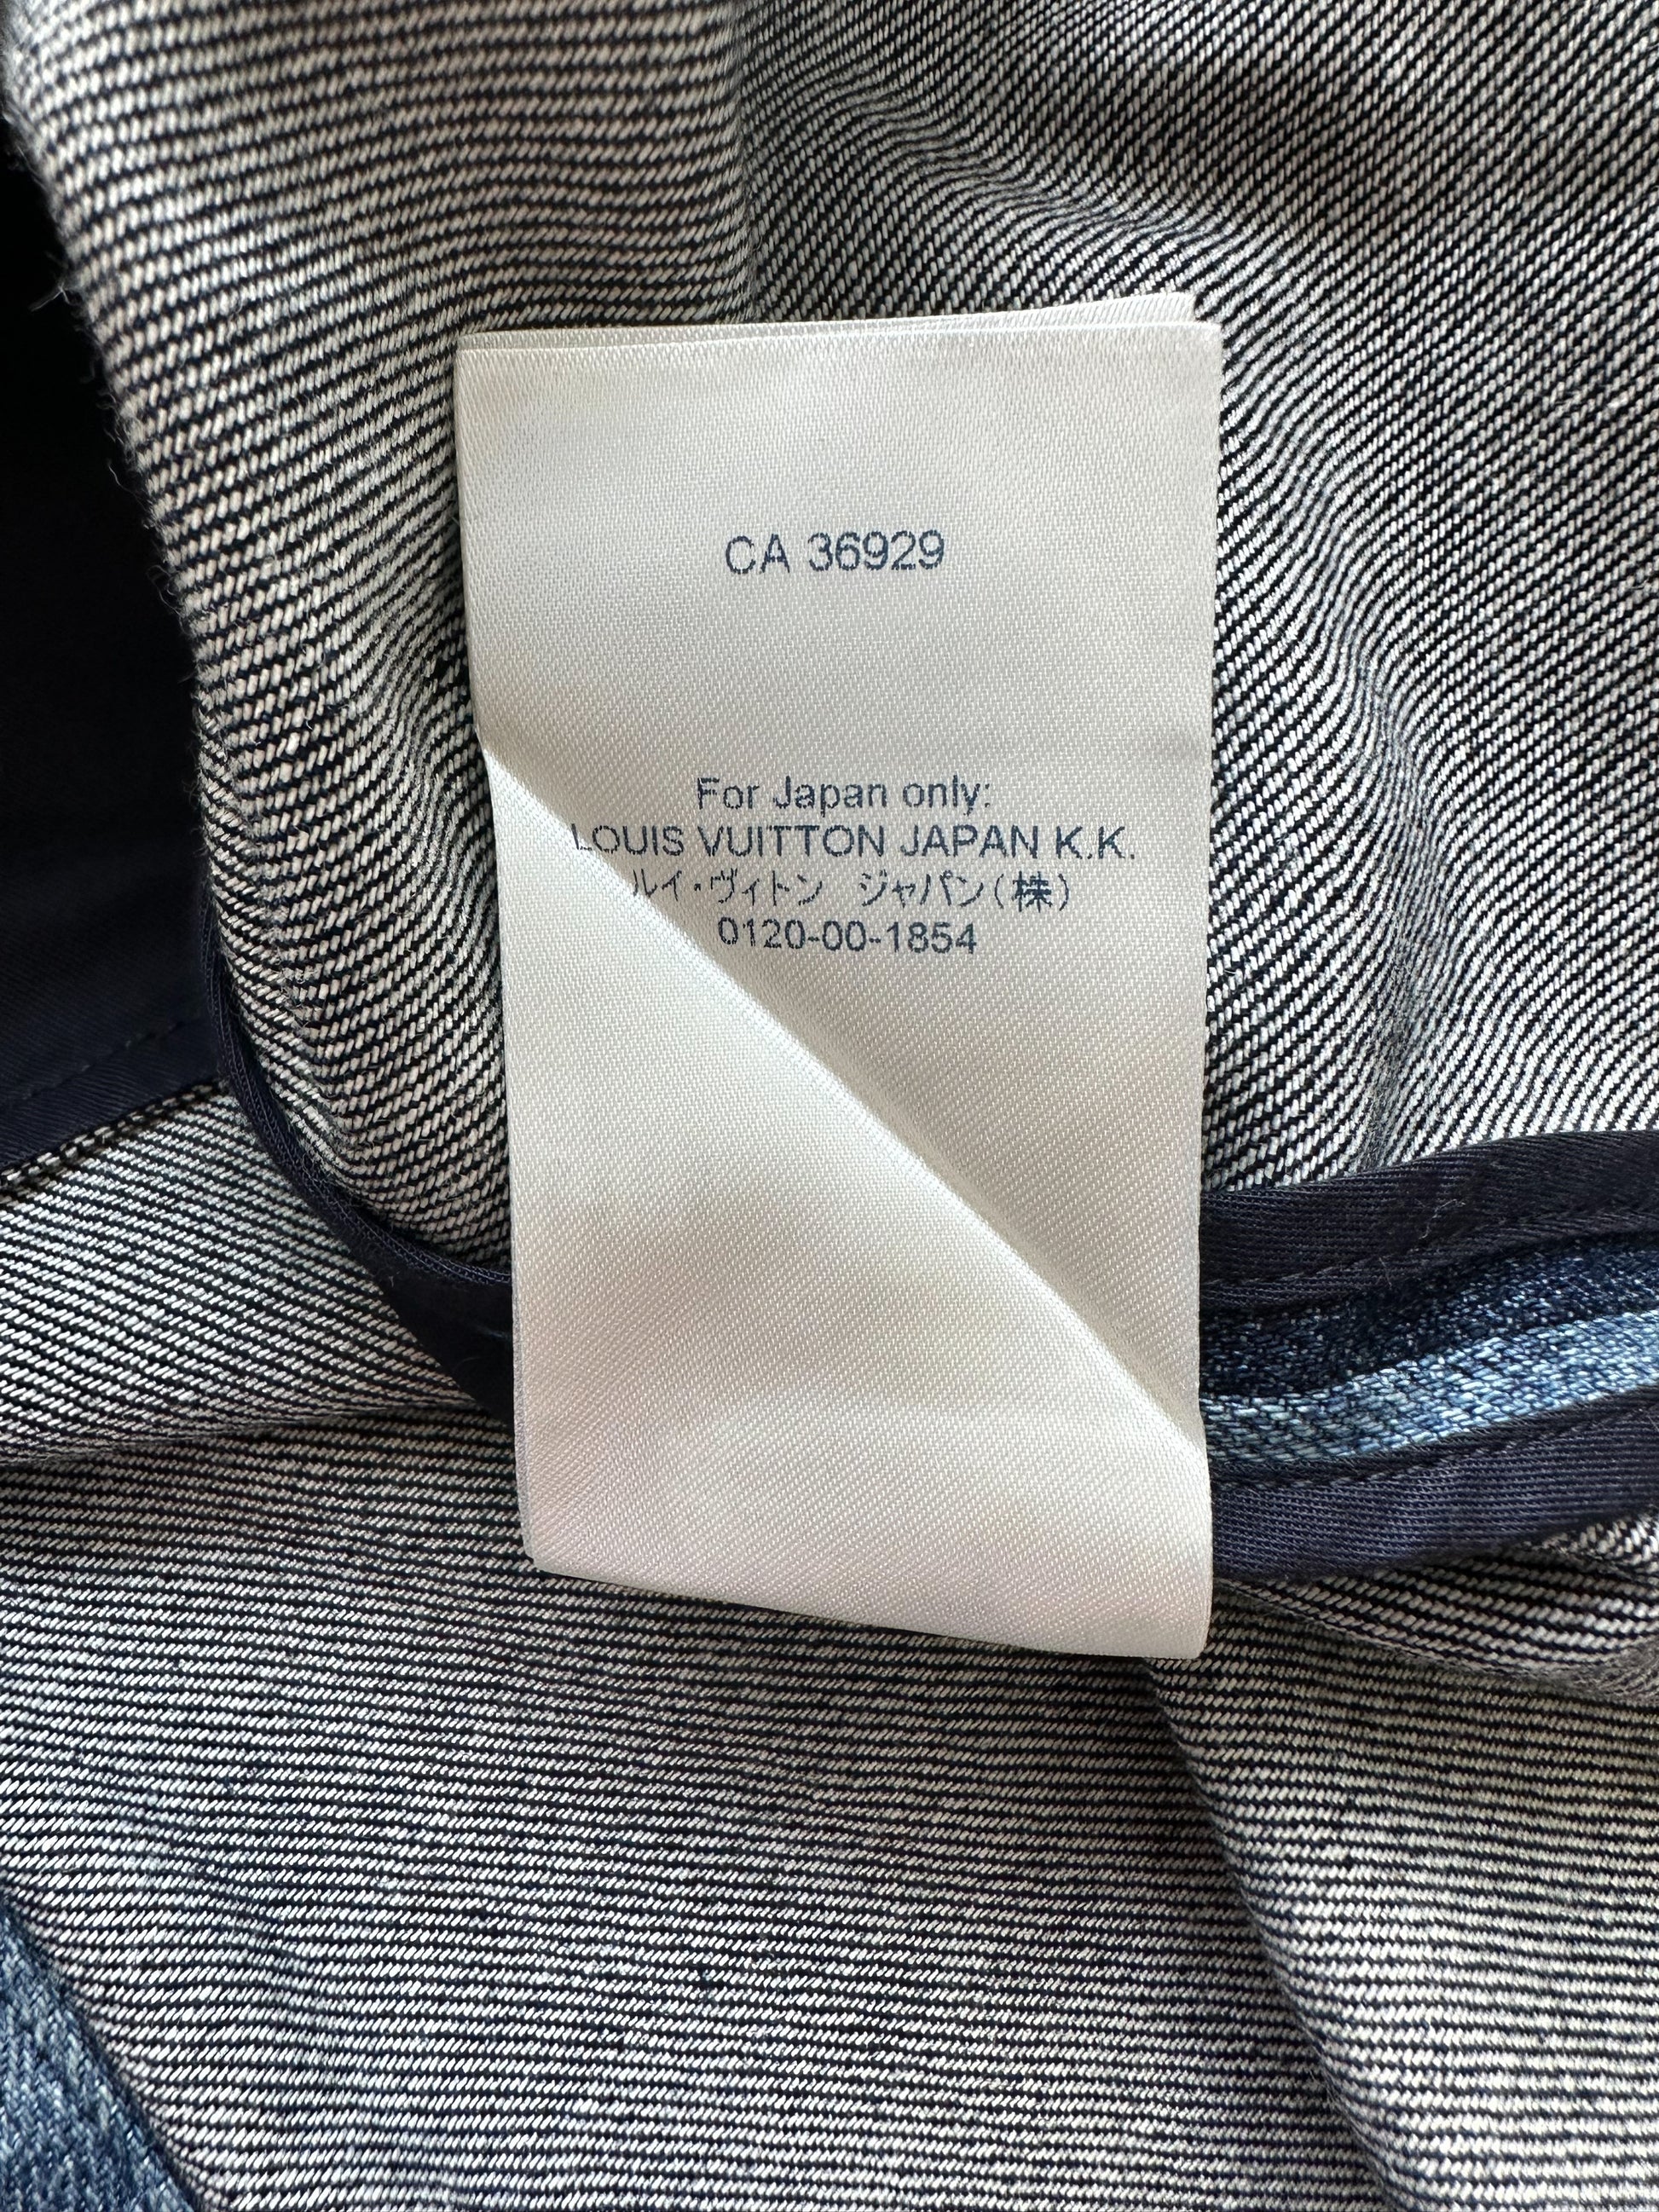 LOUIS VUITTON Damier pattern short sleeve T-shirt black size S from japan